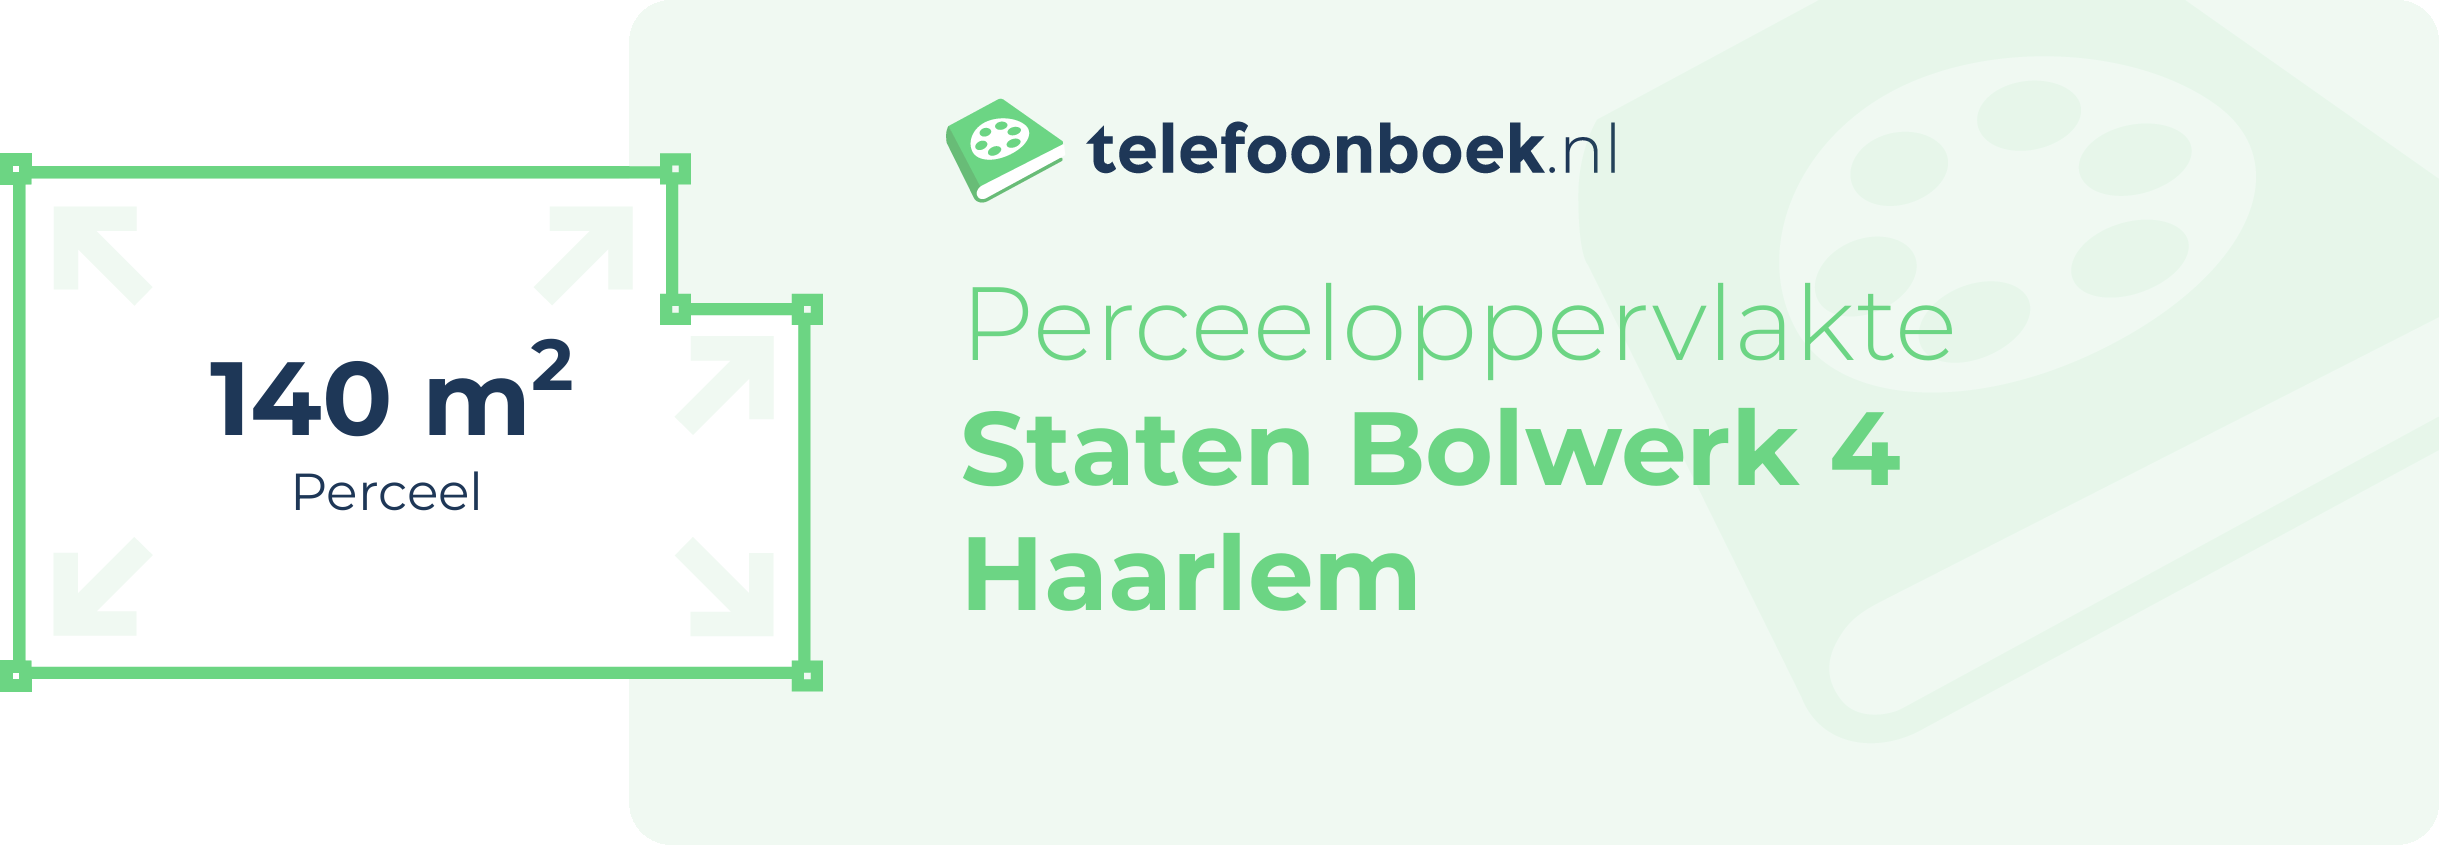 Perceeloppervlakte Staten Bolwerk 4 Haarlem